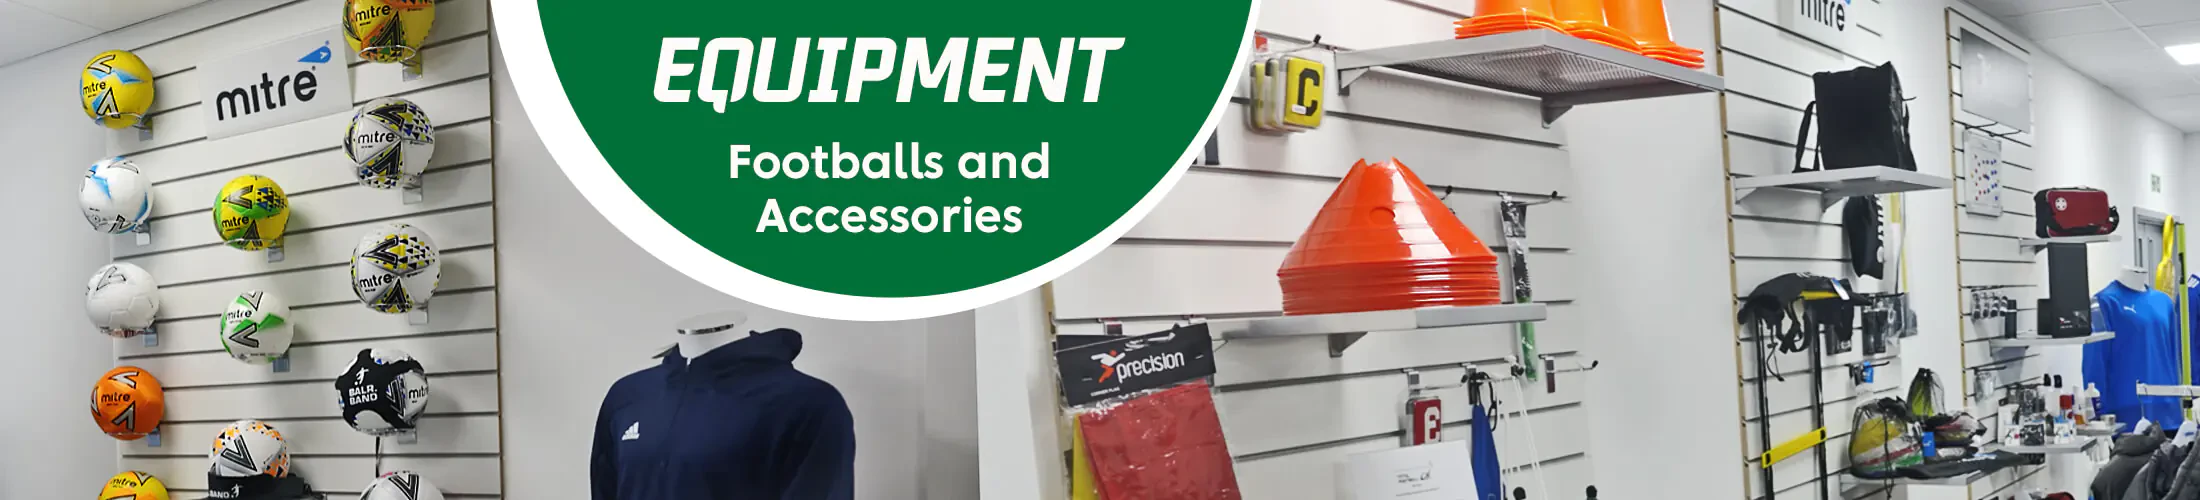 Equipment - Footballs & Accessories